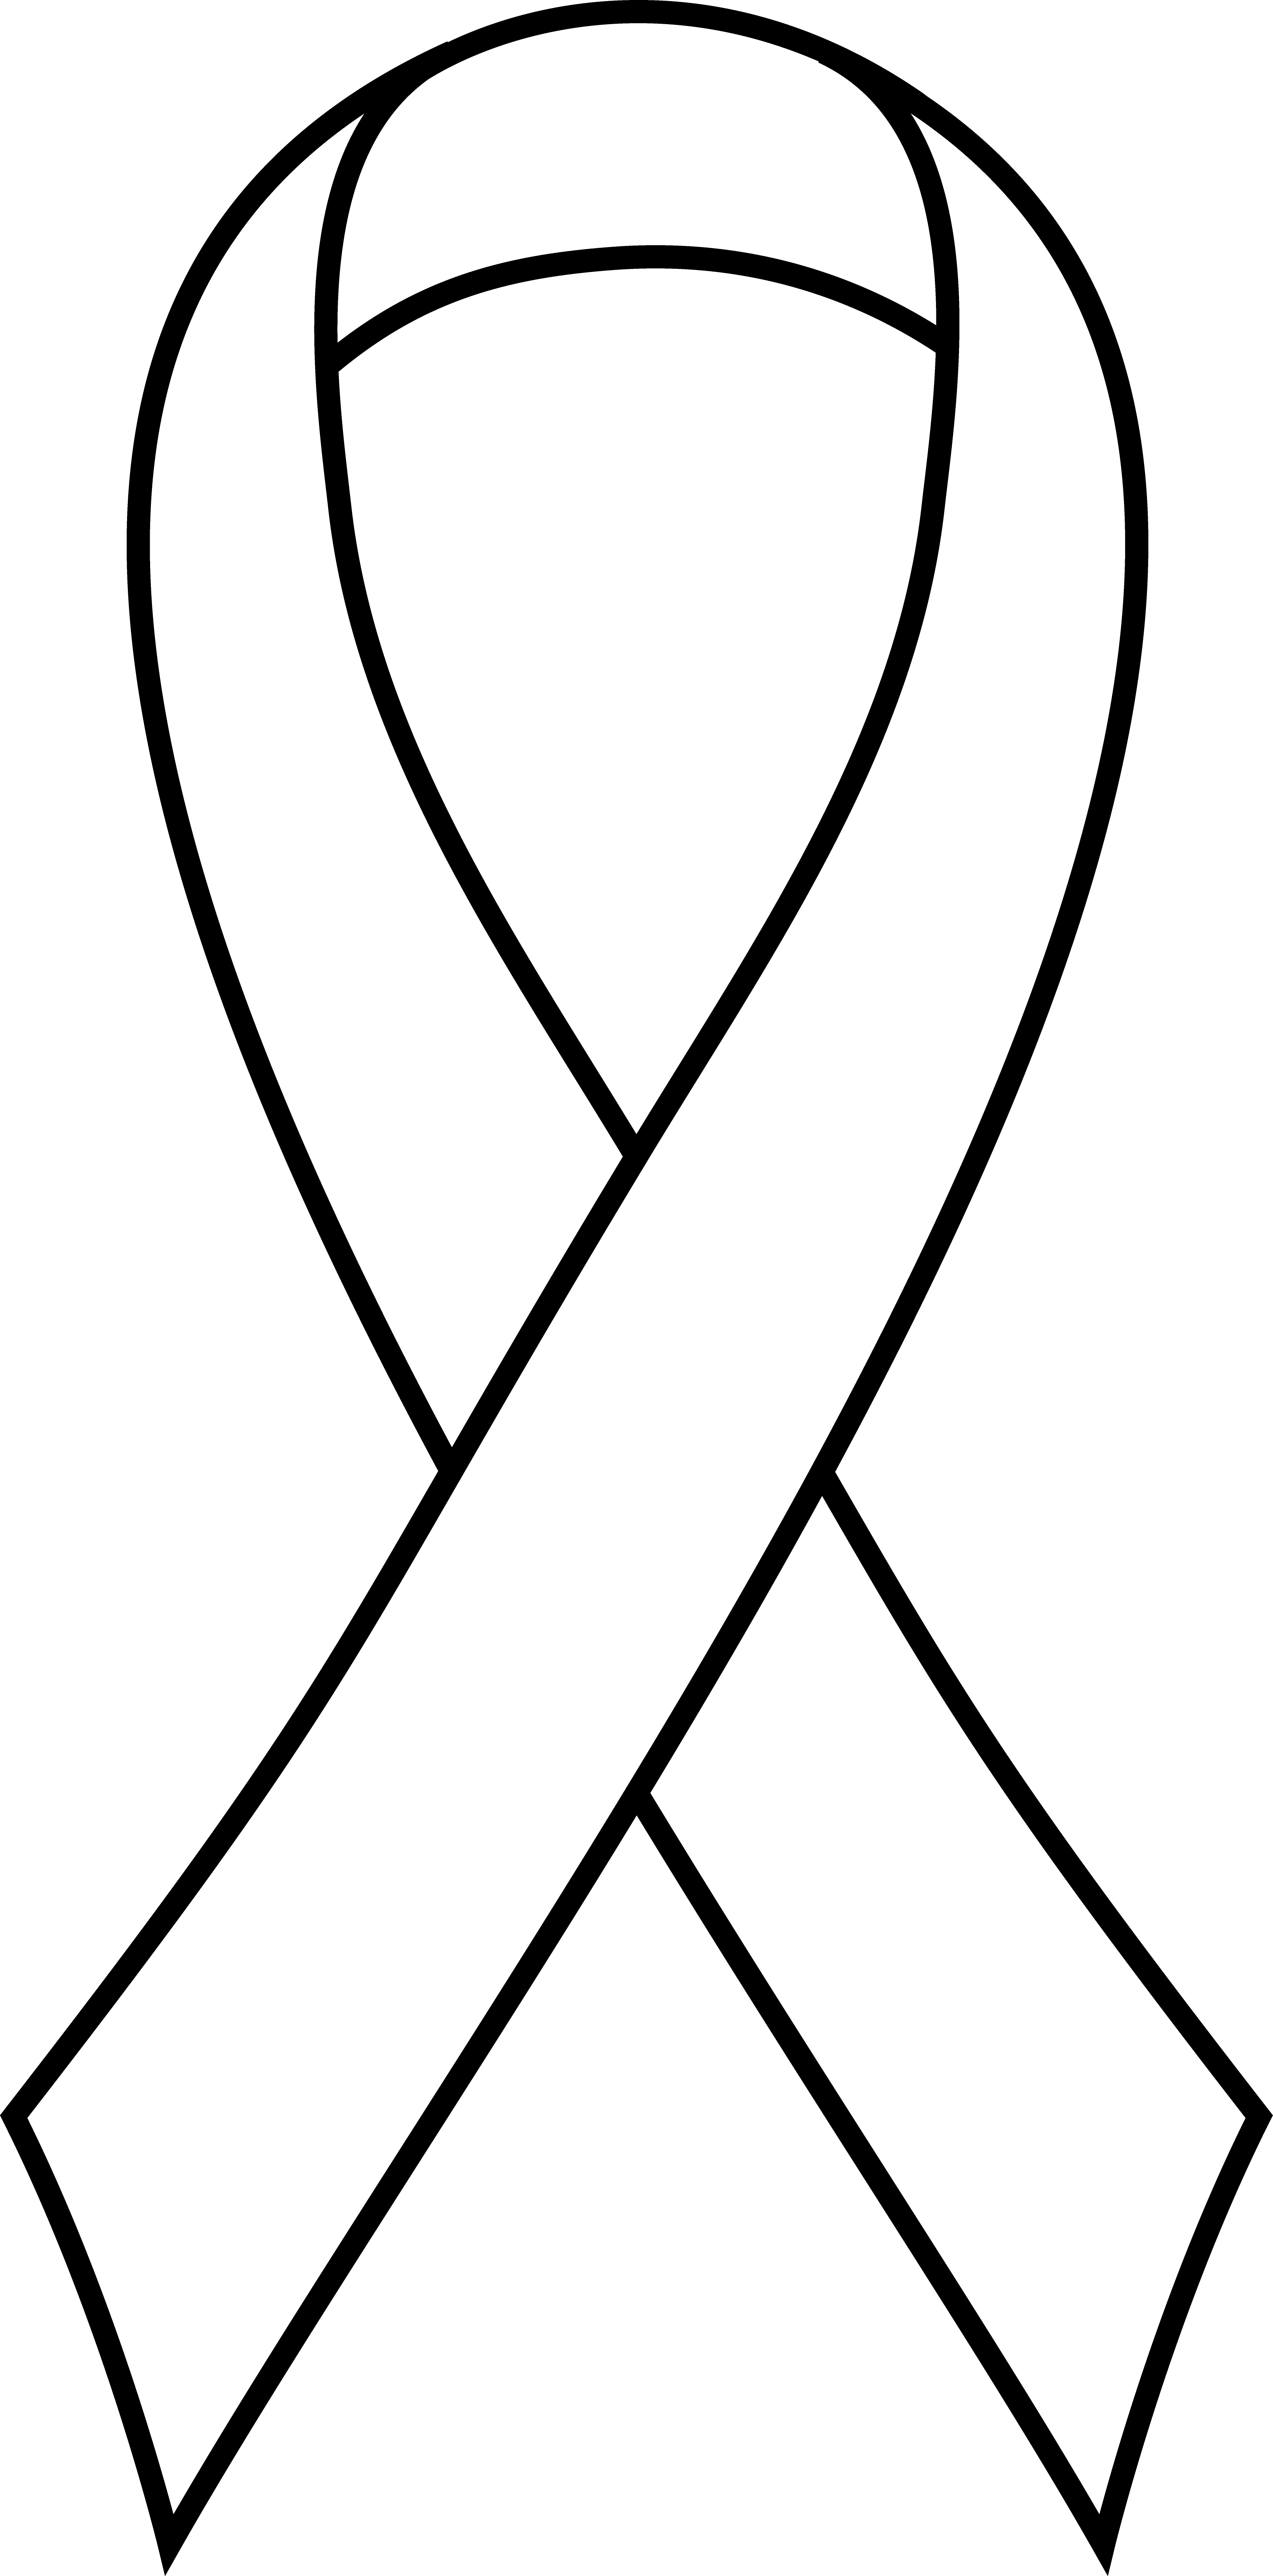 Images For > Cancer Ribbons Outline